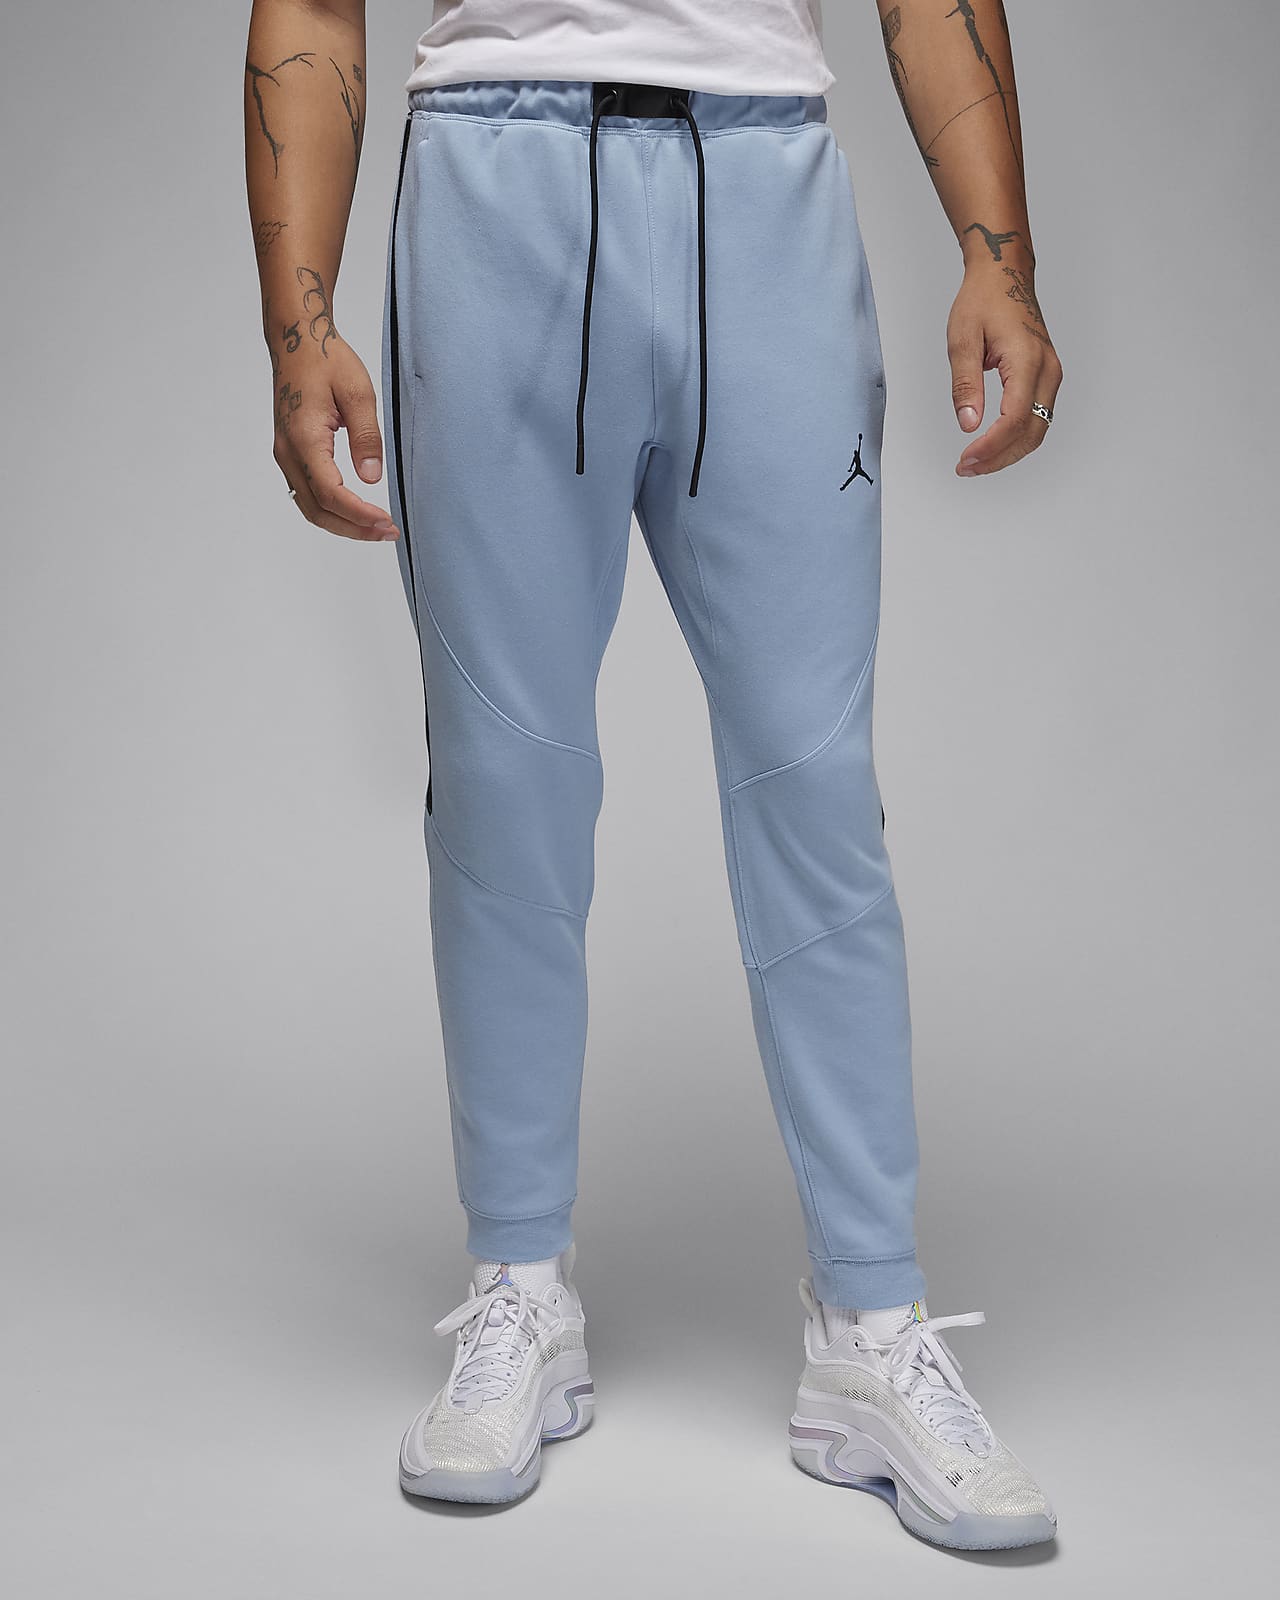 The Best Nike Fleece Pants for Men .